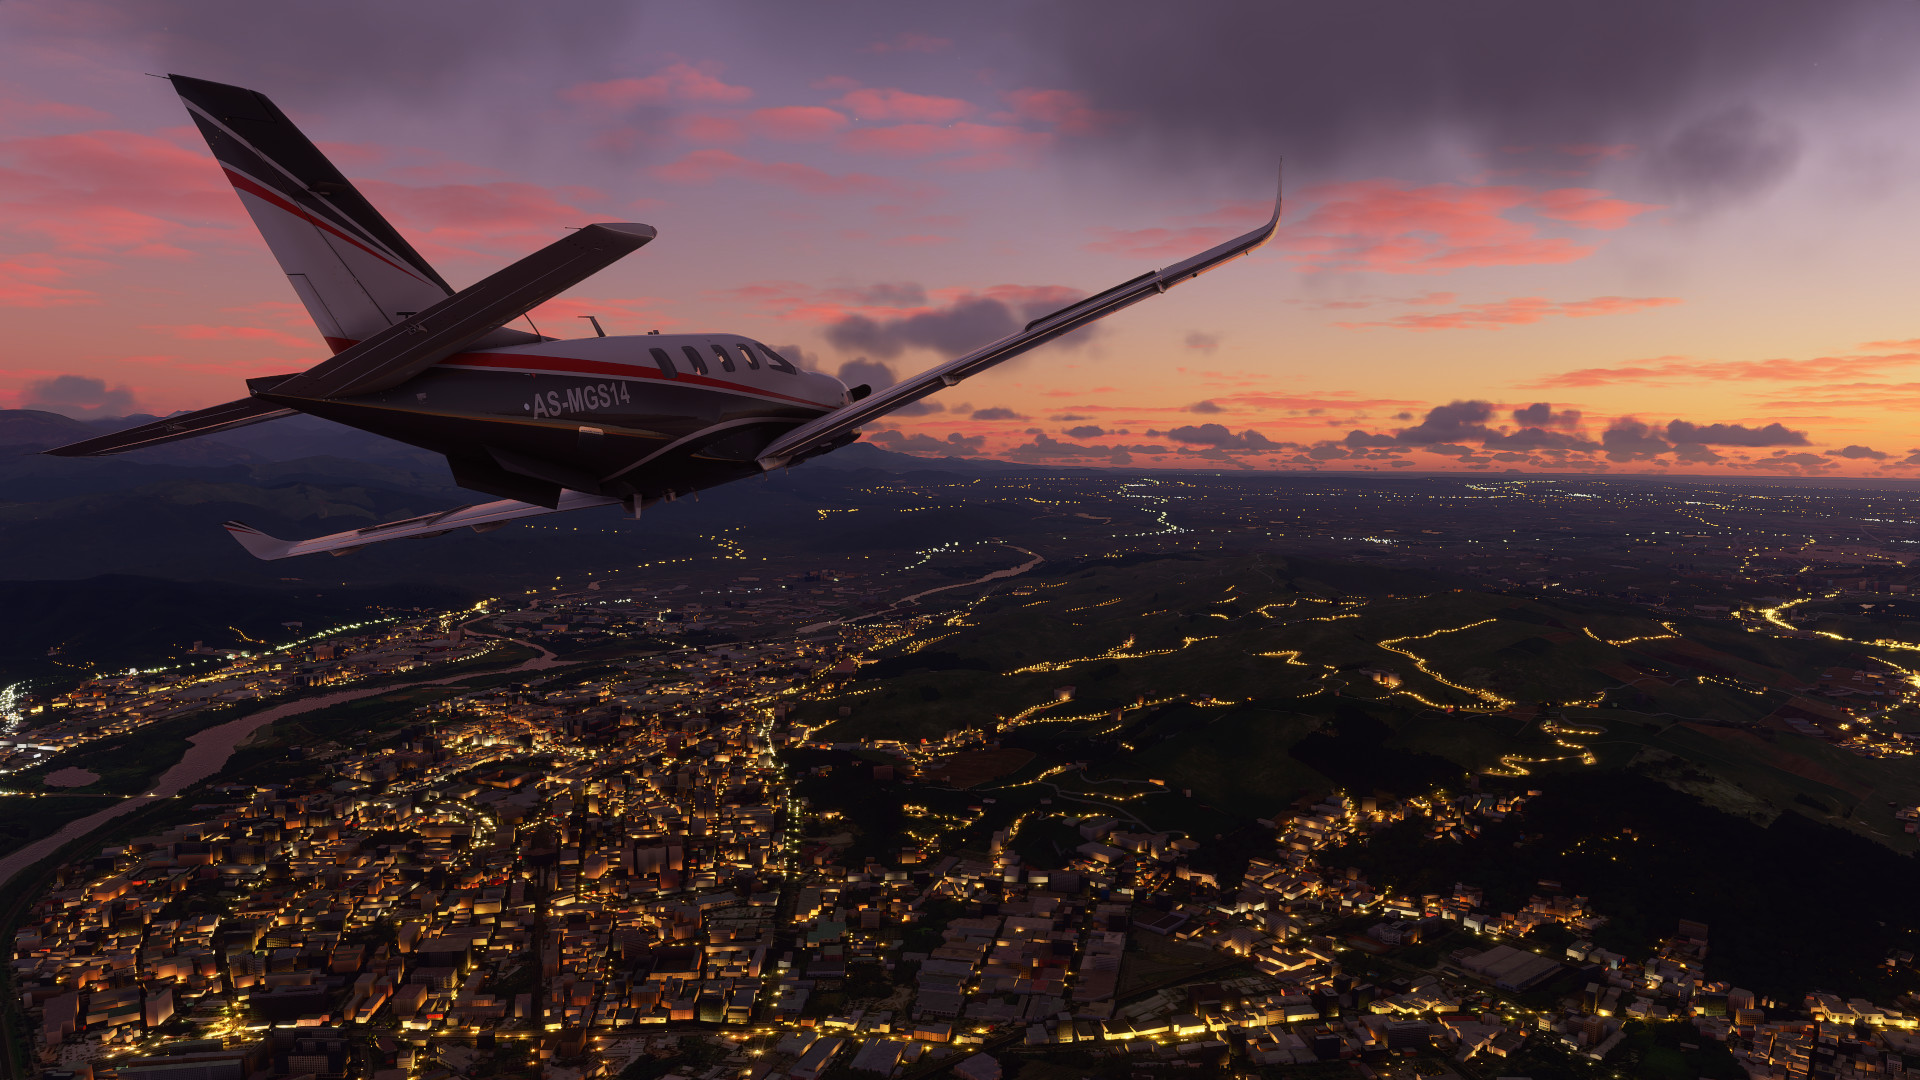 Microsoft Flight Simulator 2020 - VR Confirmed, Steam Release, Previews 